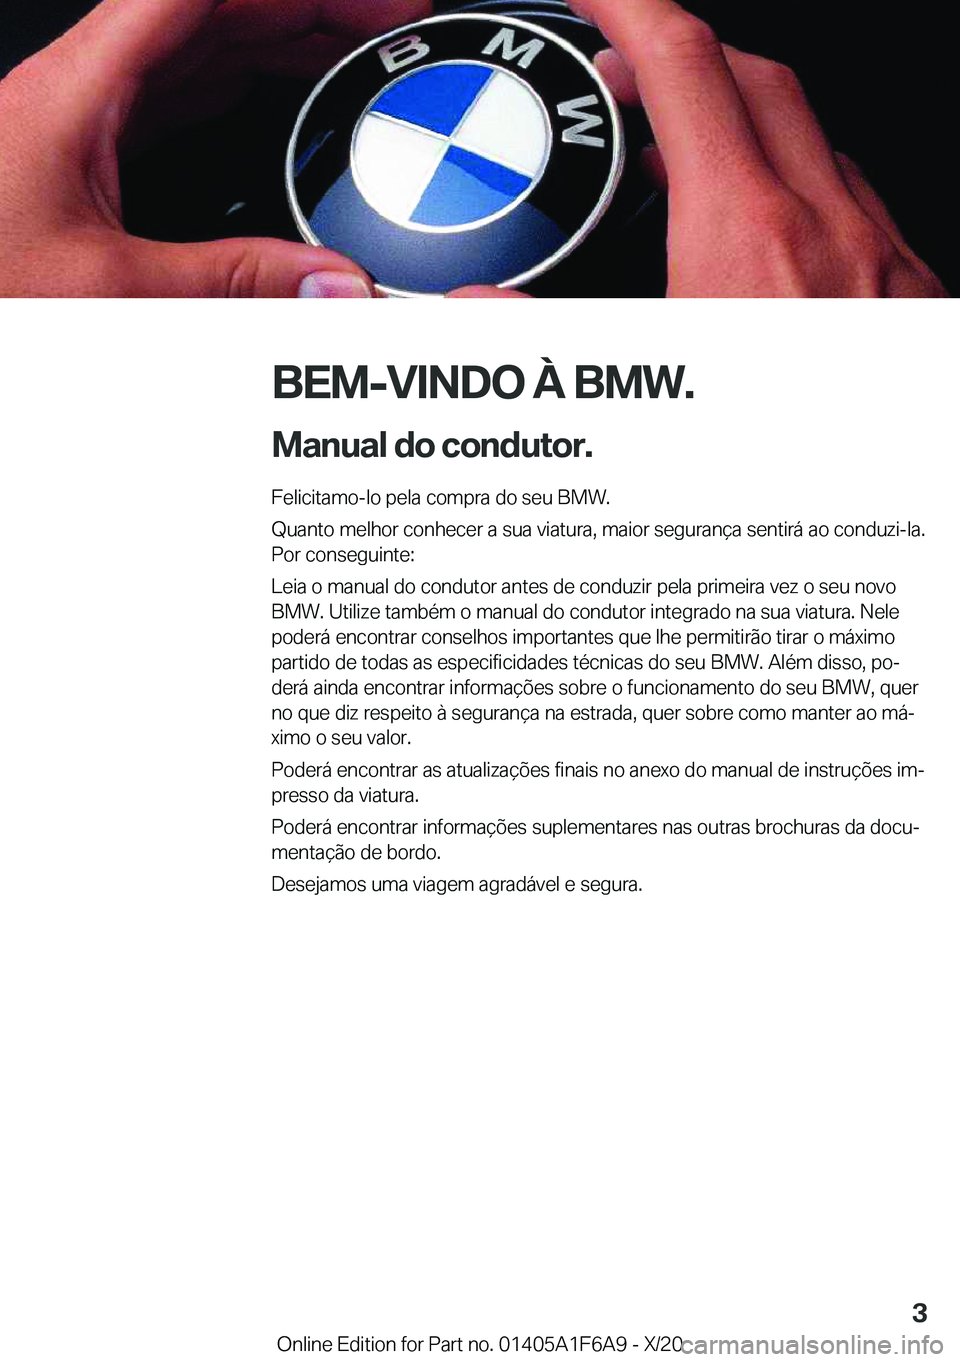 BMW X4 2021  Manual do condutor (in Portuguese) �B�E�M�-�V�I�N�D�O��À��B�M�W�.
�M�a�n�u�a�l��d�o��c�o�n�d�u�t�o�r�. �F�e�l�i�c�i�t�a�m�o�-�l�o��p�e�l�a��c�o�m�p�r�a��d�o��s�e�u��B�M�W�.
�Q�u�a�n�t�o��m�e�l�h�o�r��c�o�n�h�e�c�e�r��a��s